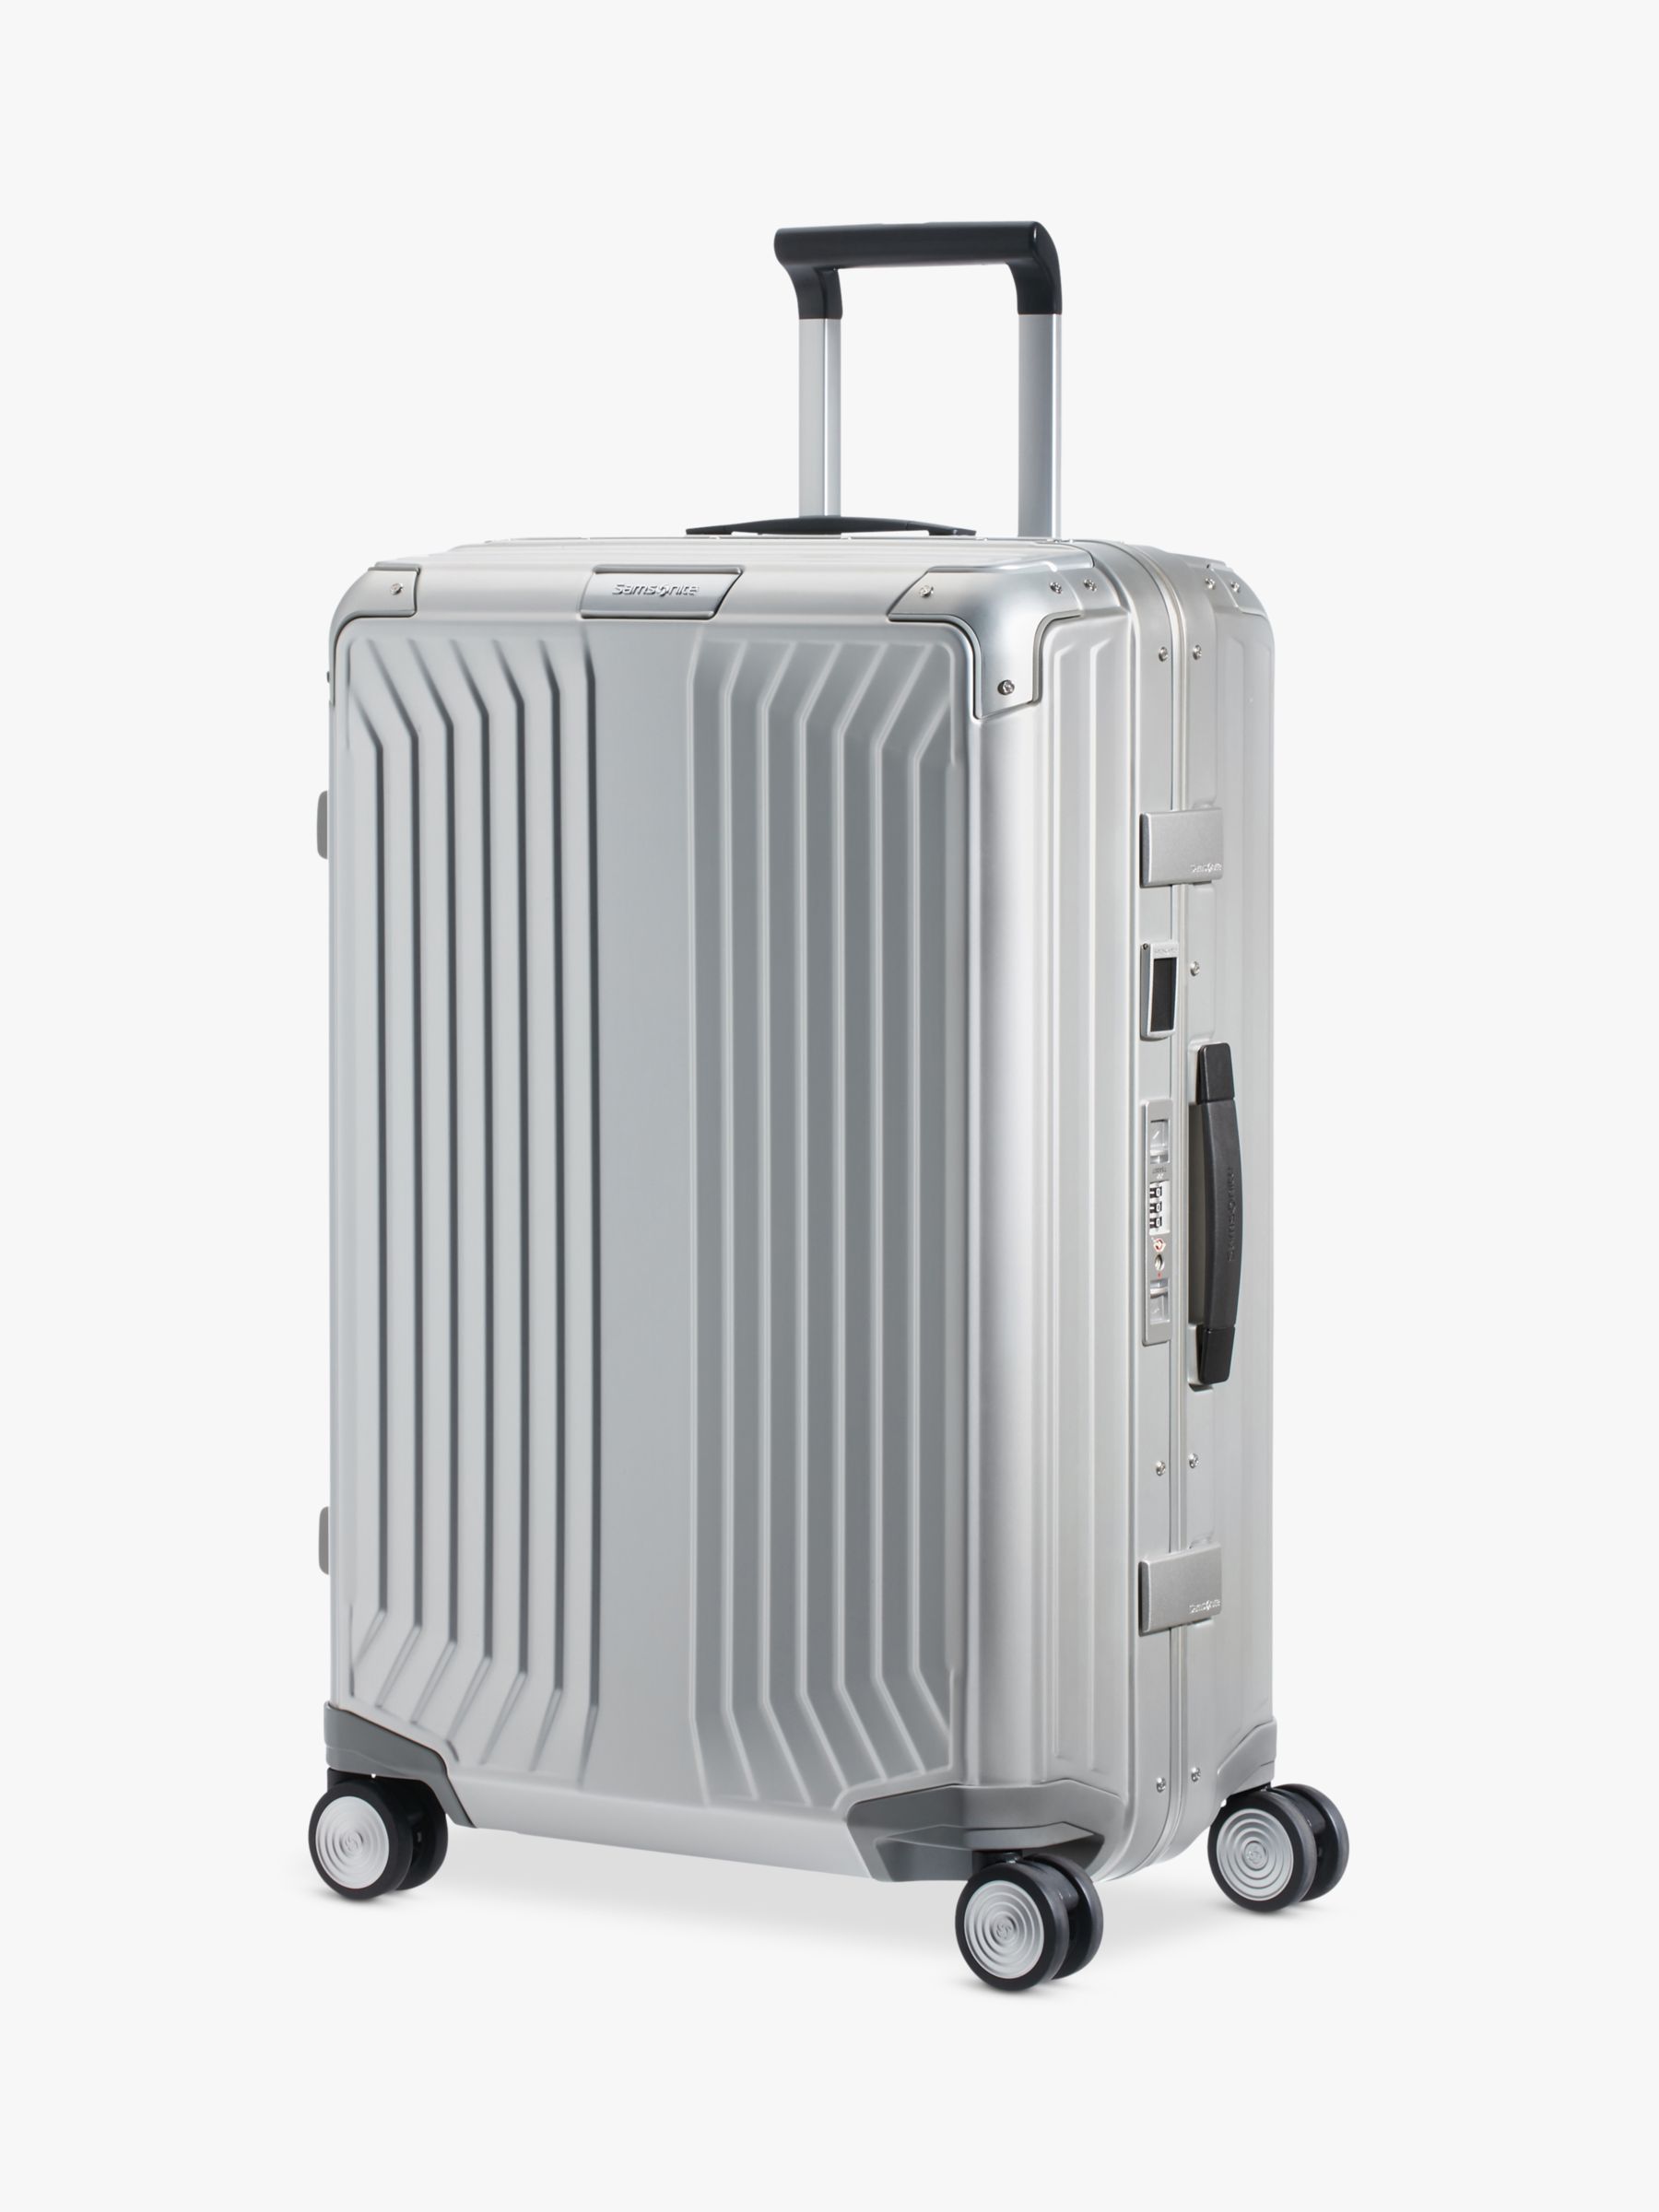 samsonite white luggage,OFF 80%,www.concordehotels.com.tr